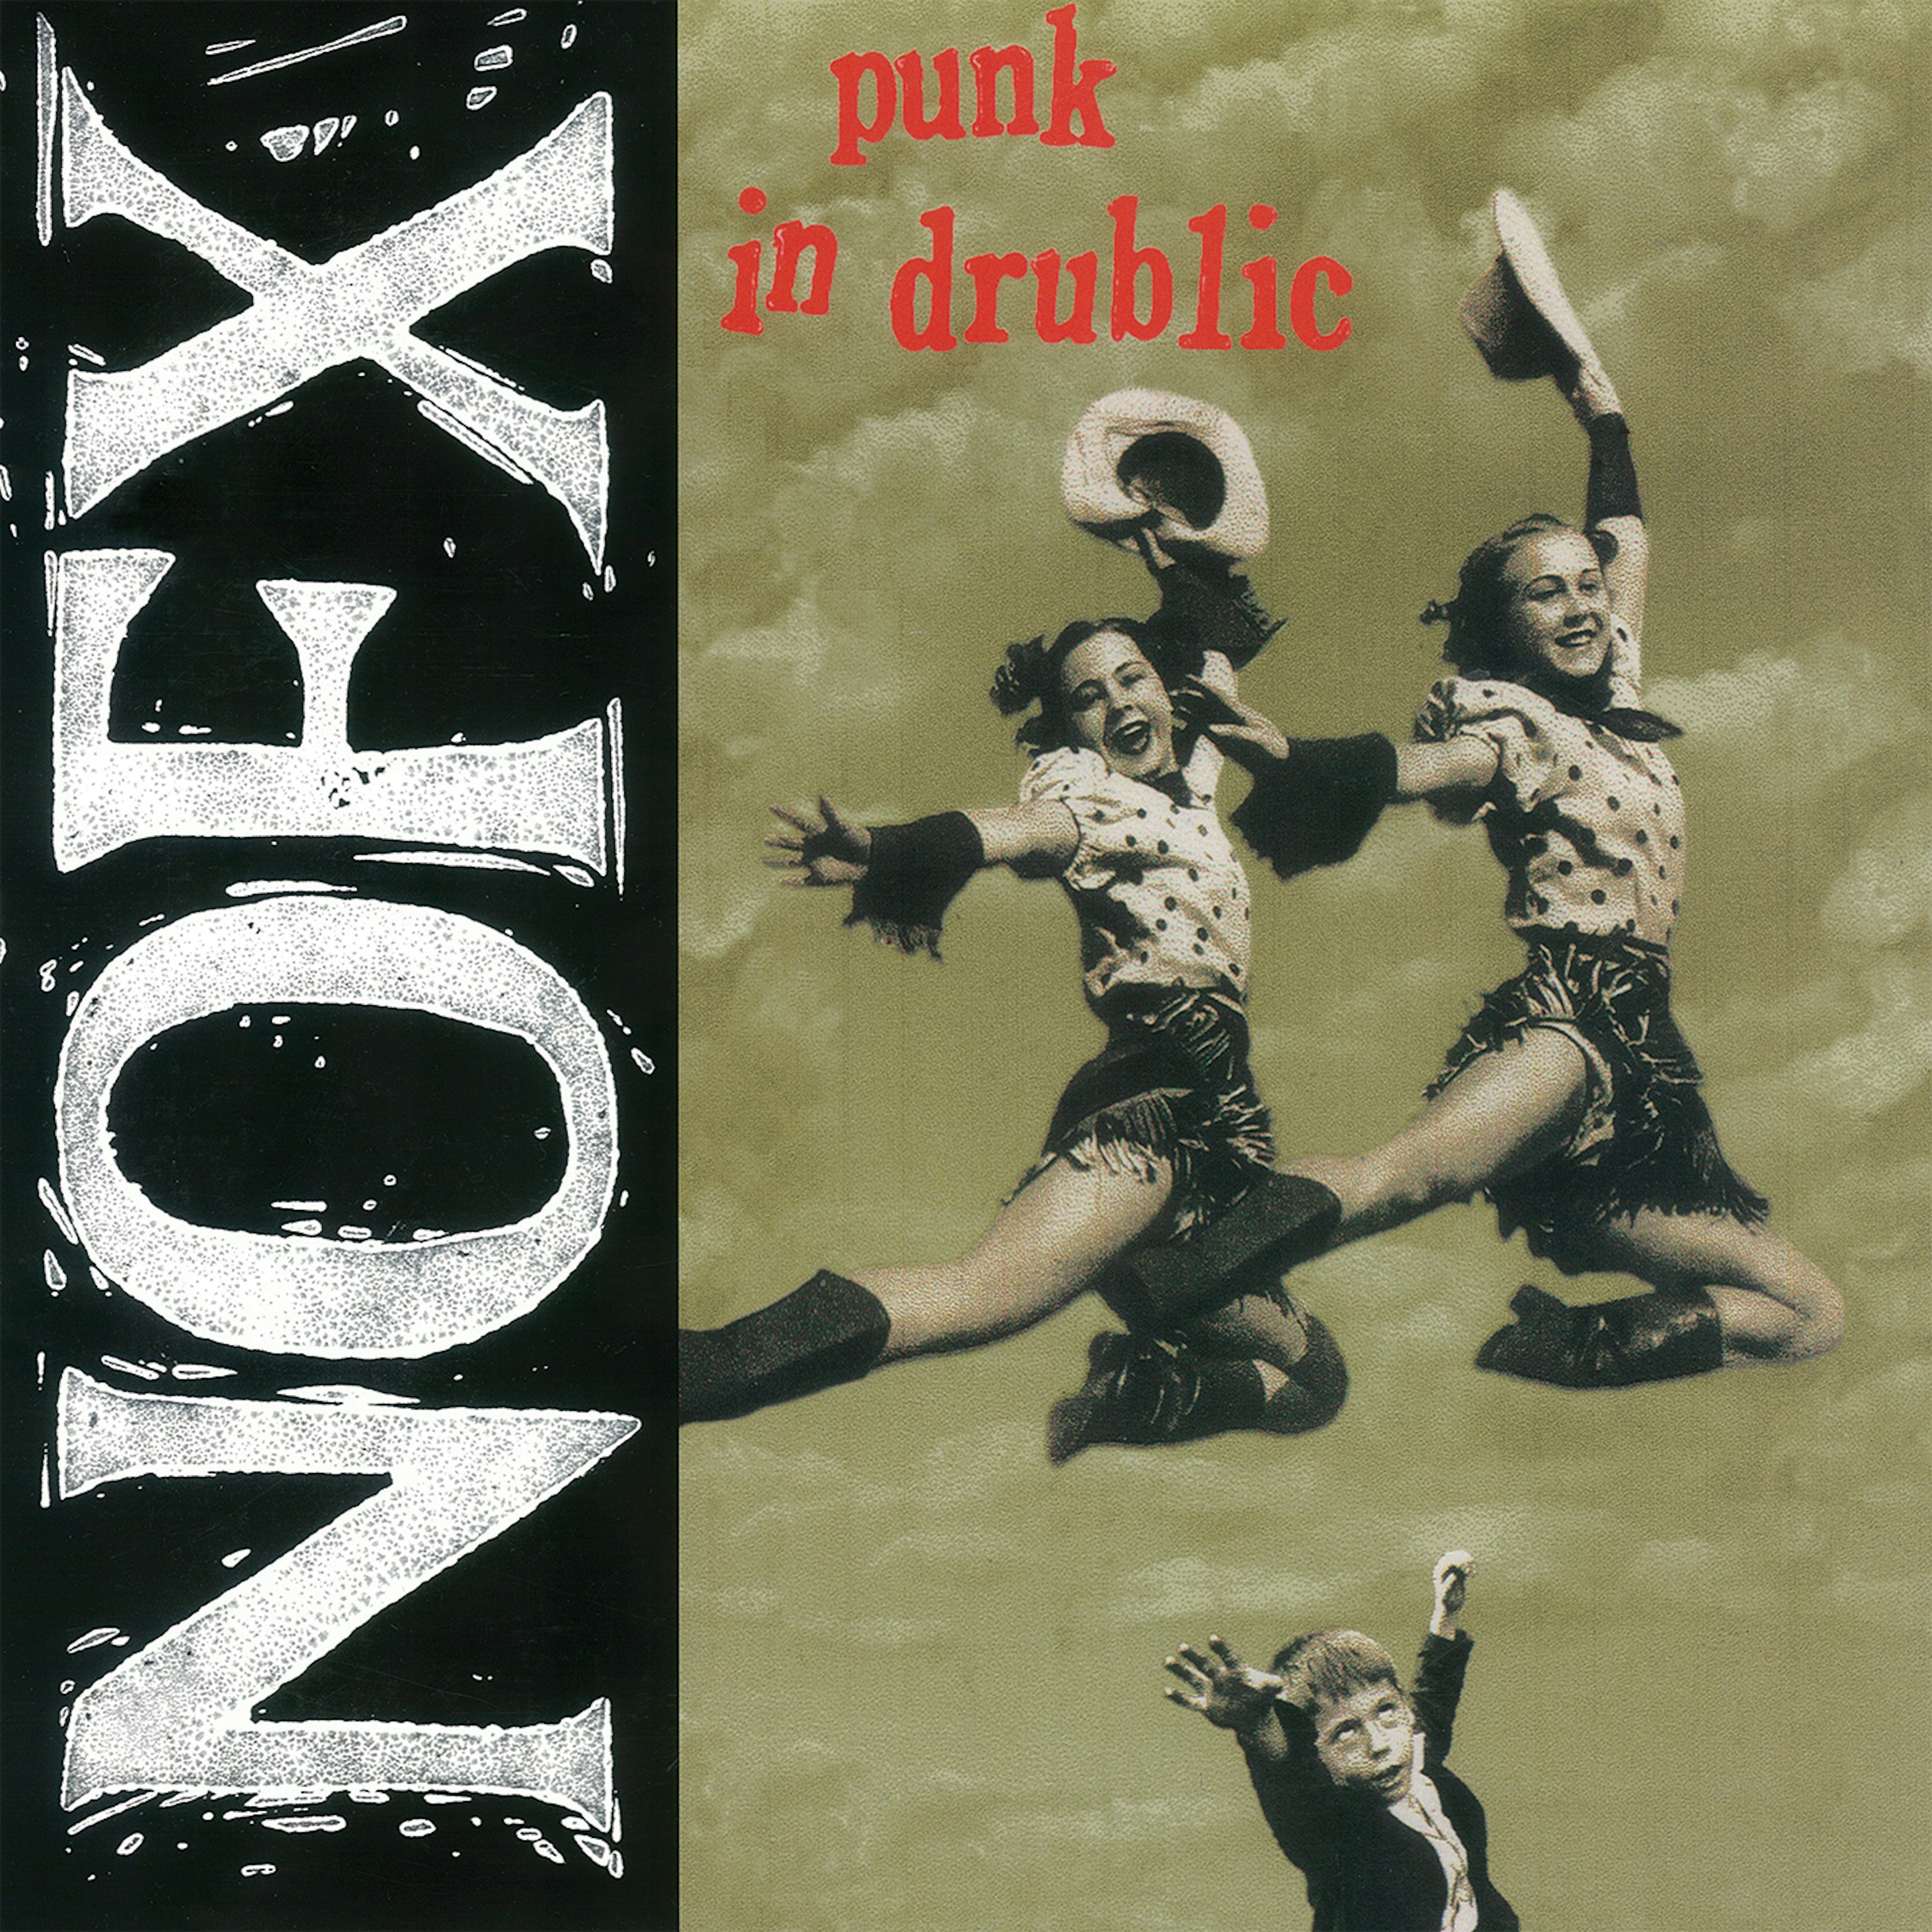 NOFX Punk Drublic Vinyl Record